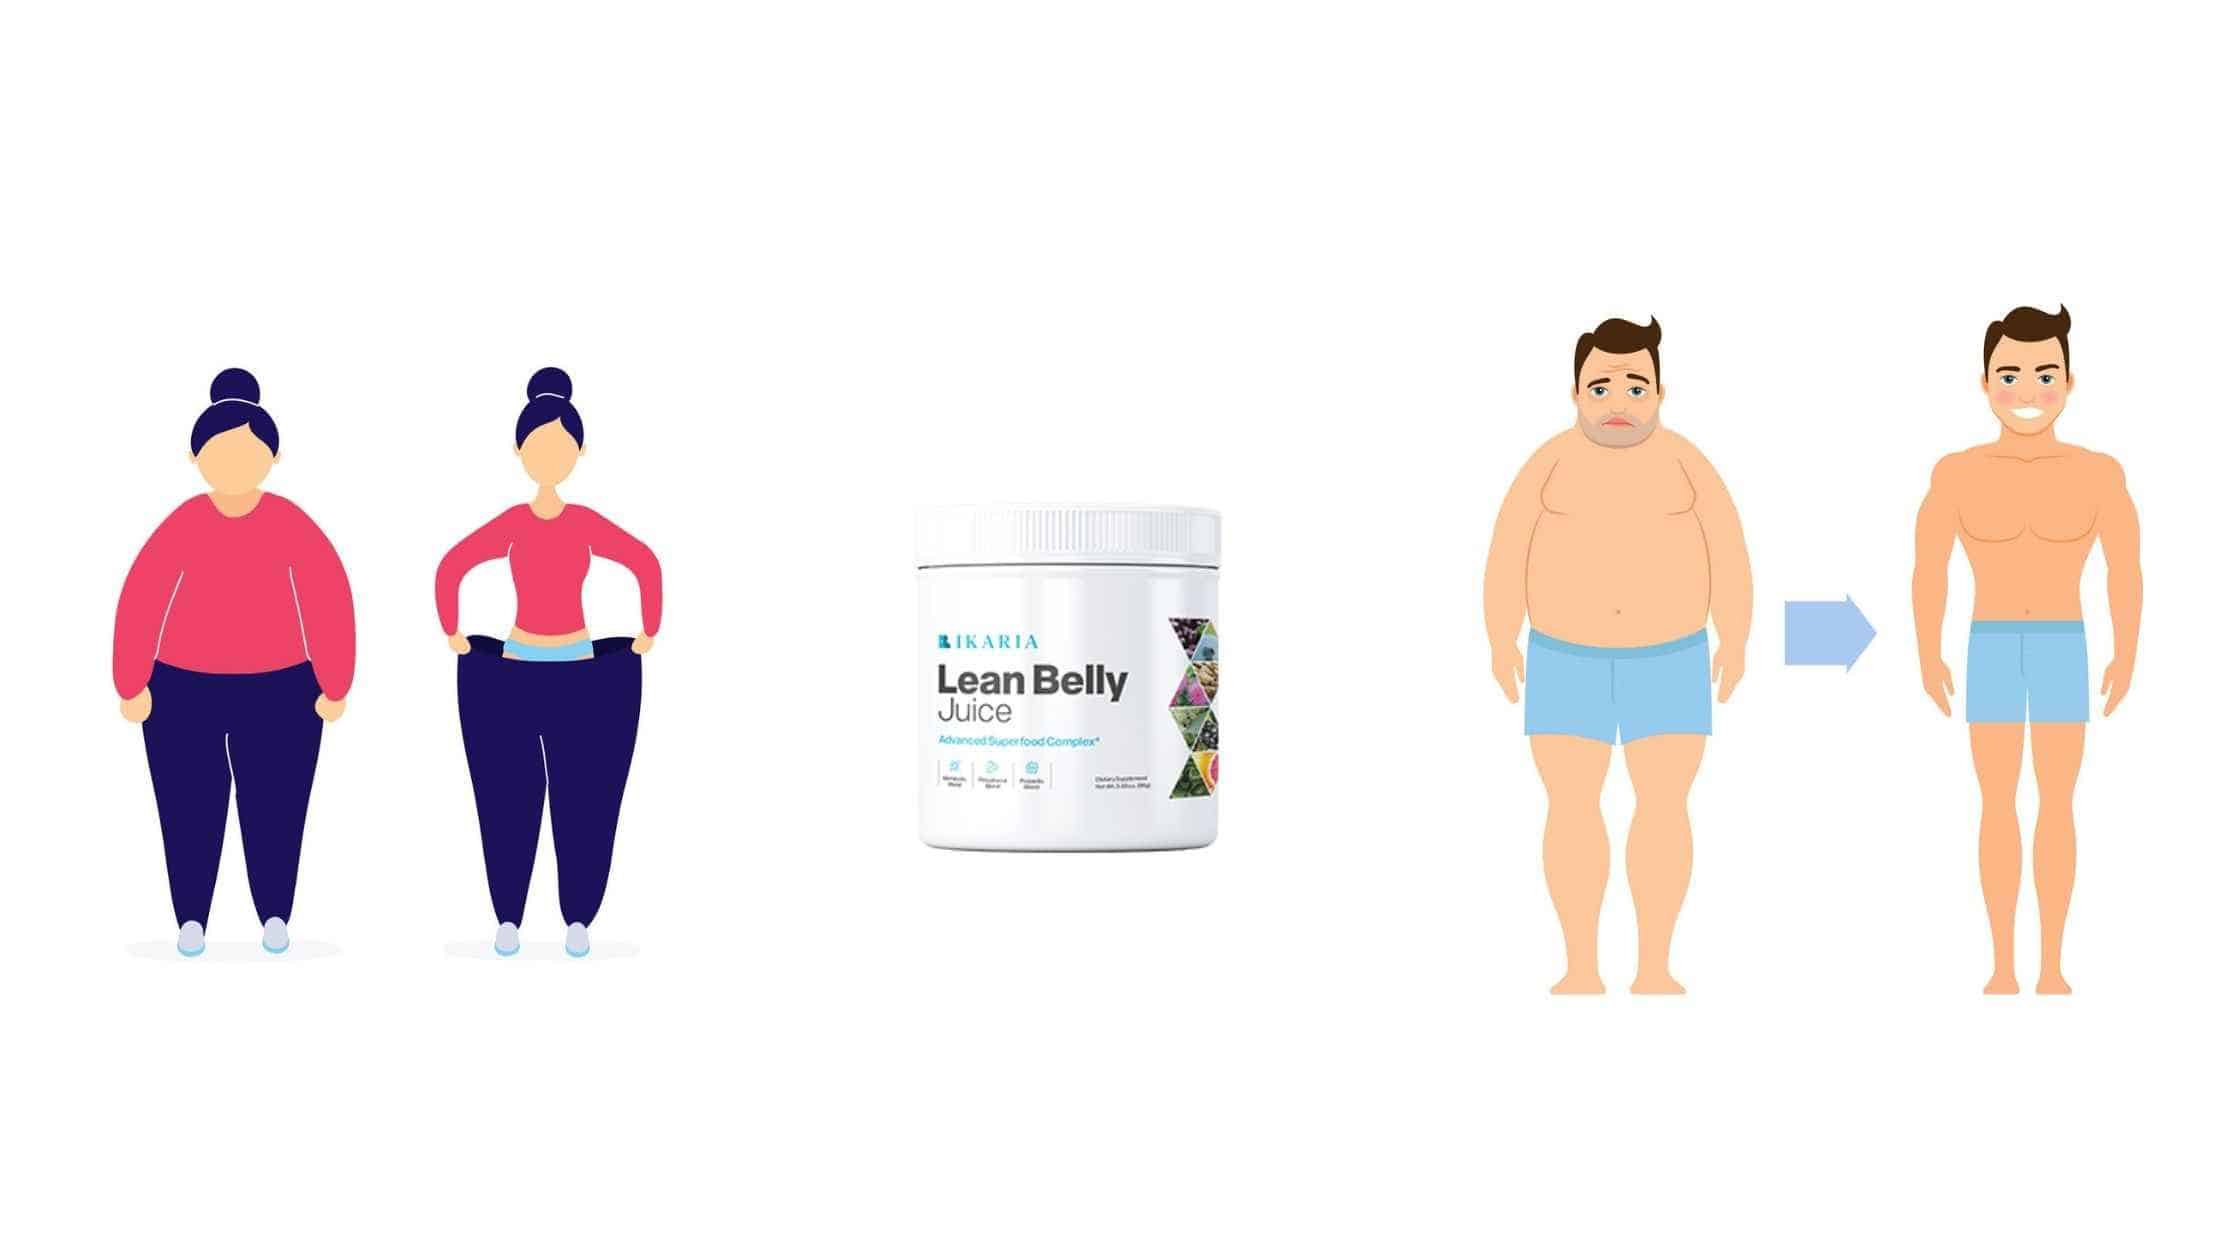 Ikaria Lean Belly Juice Formula Benefits